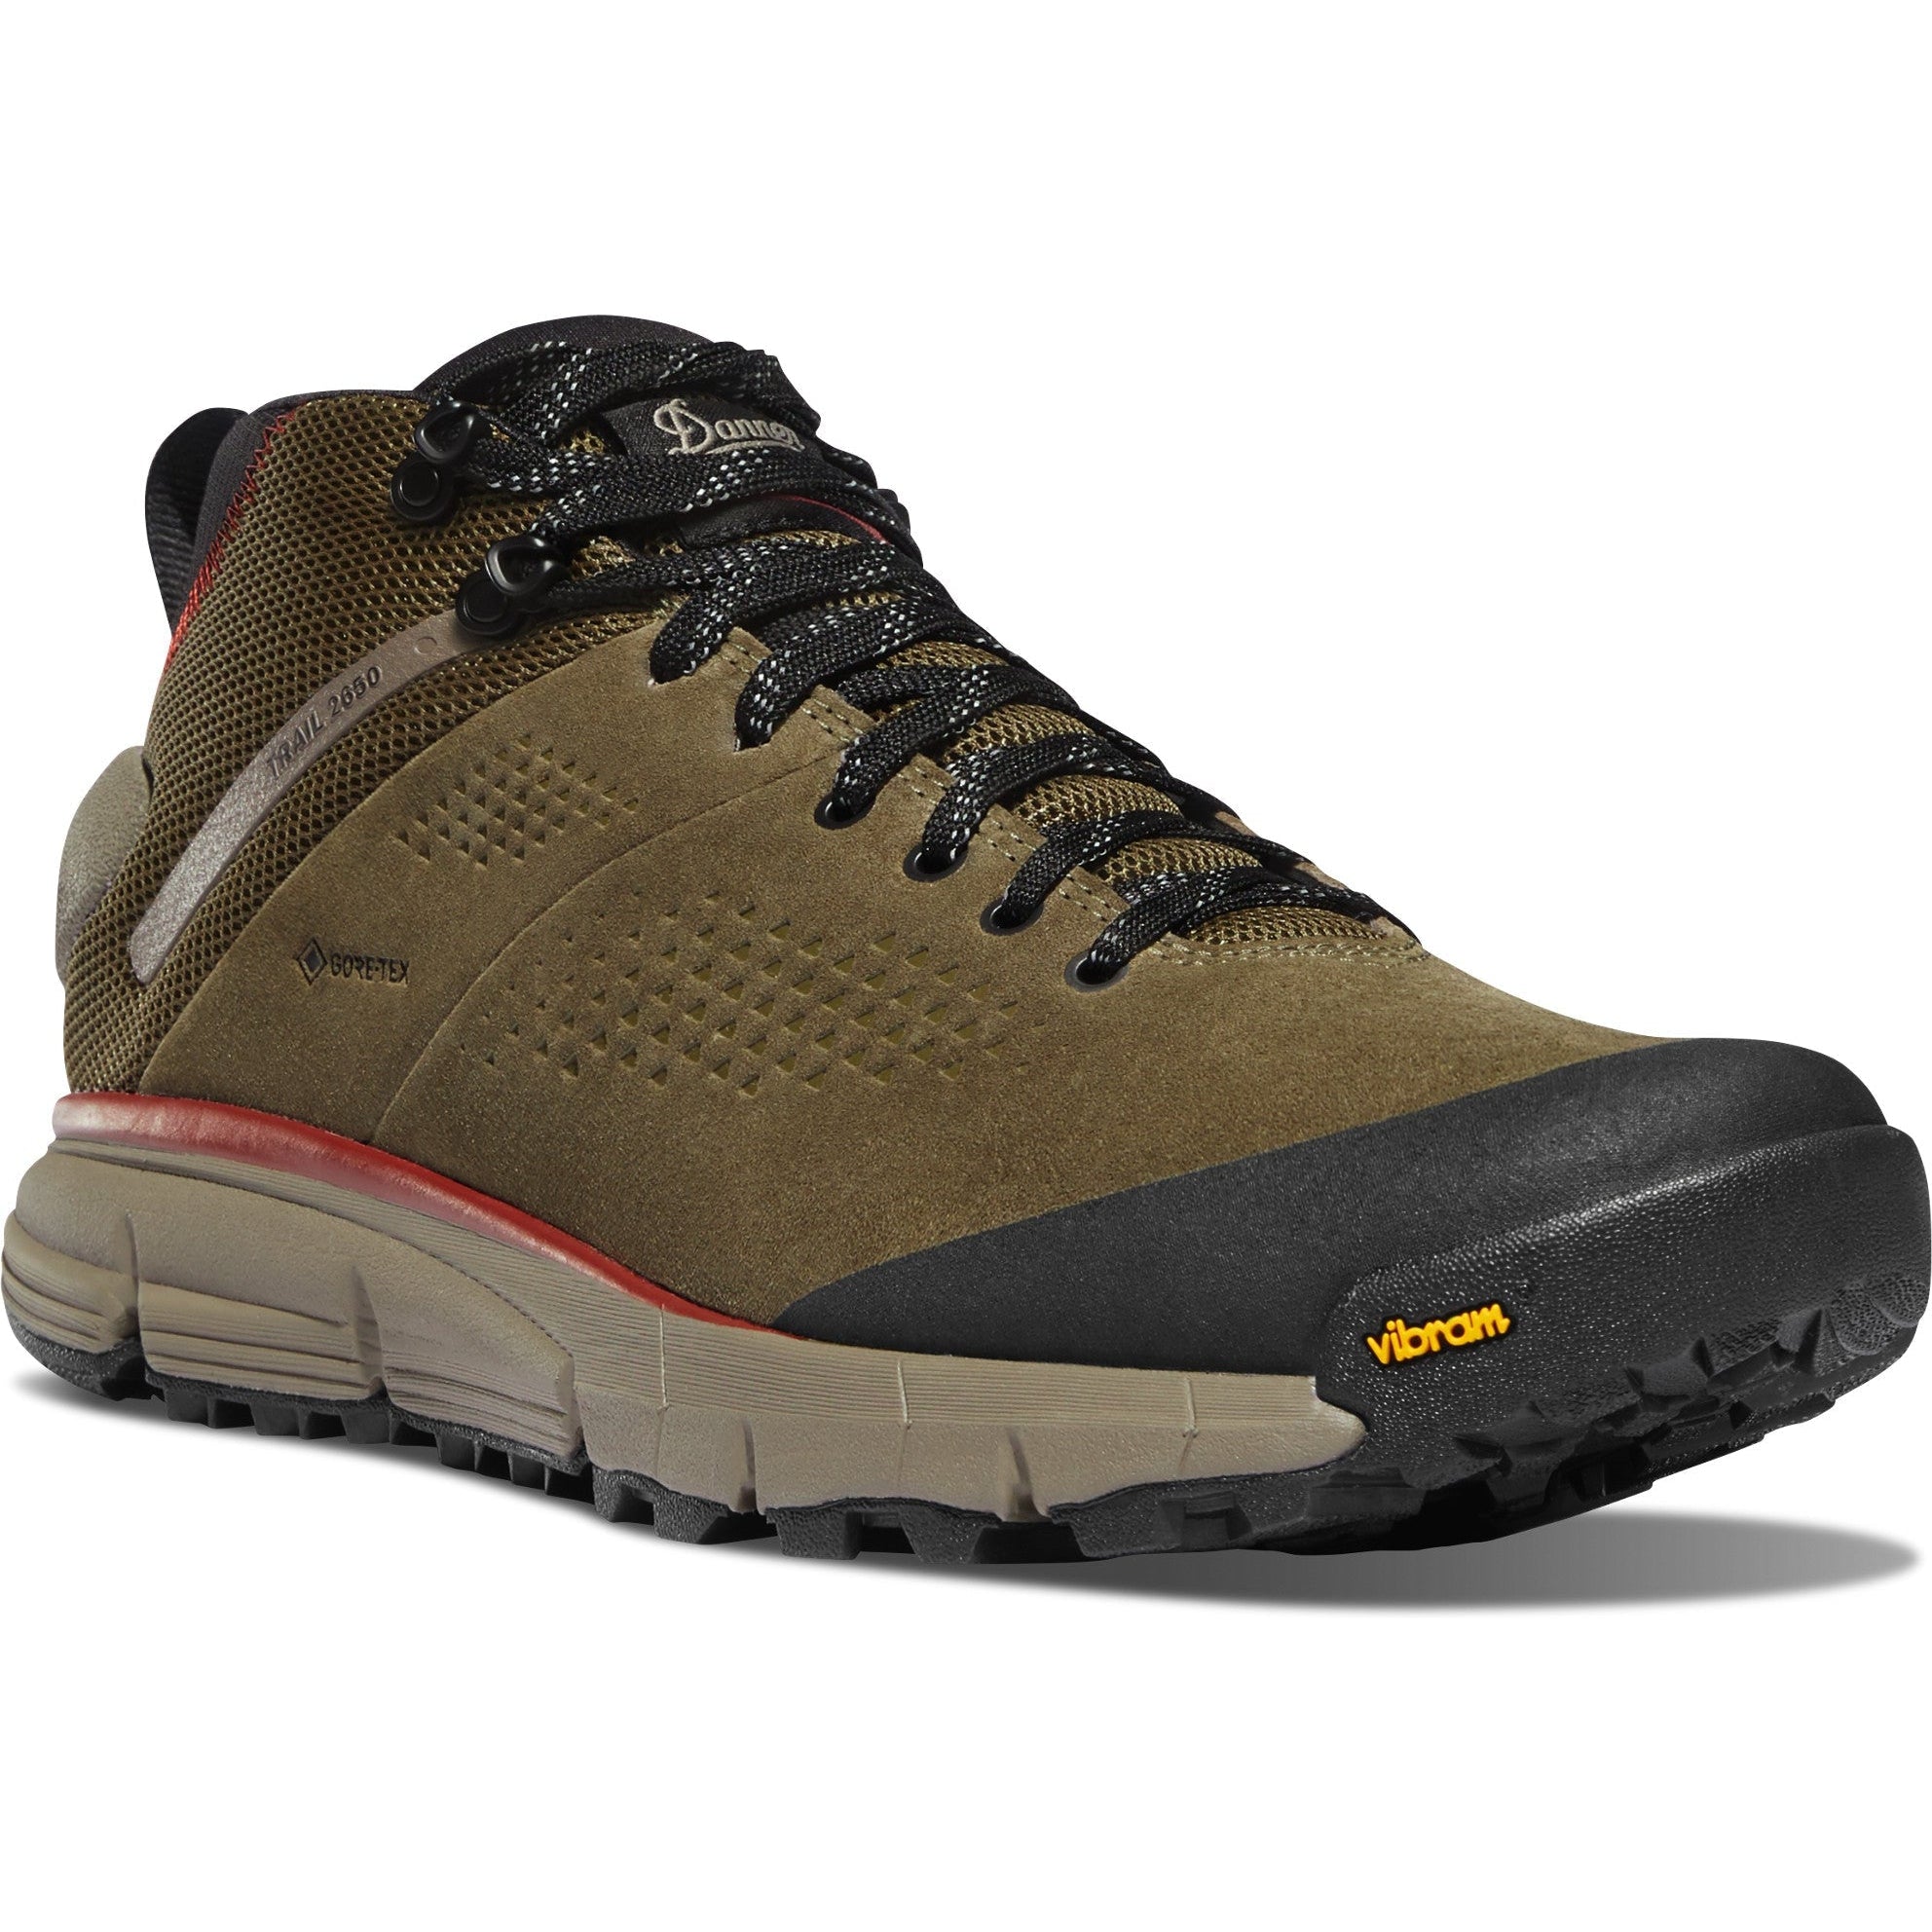 Danner Men's Trail 2650 GTX Mid 4" WP Hiking Shoe - Olive - 61240 7 / Medium / Olive - Overlook Boots